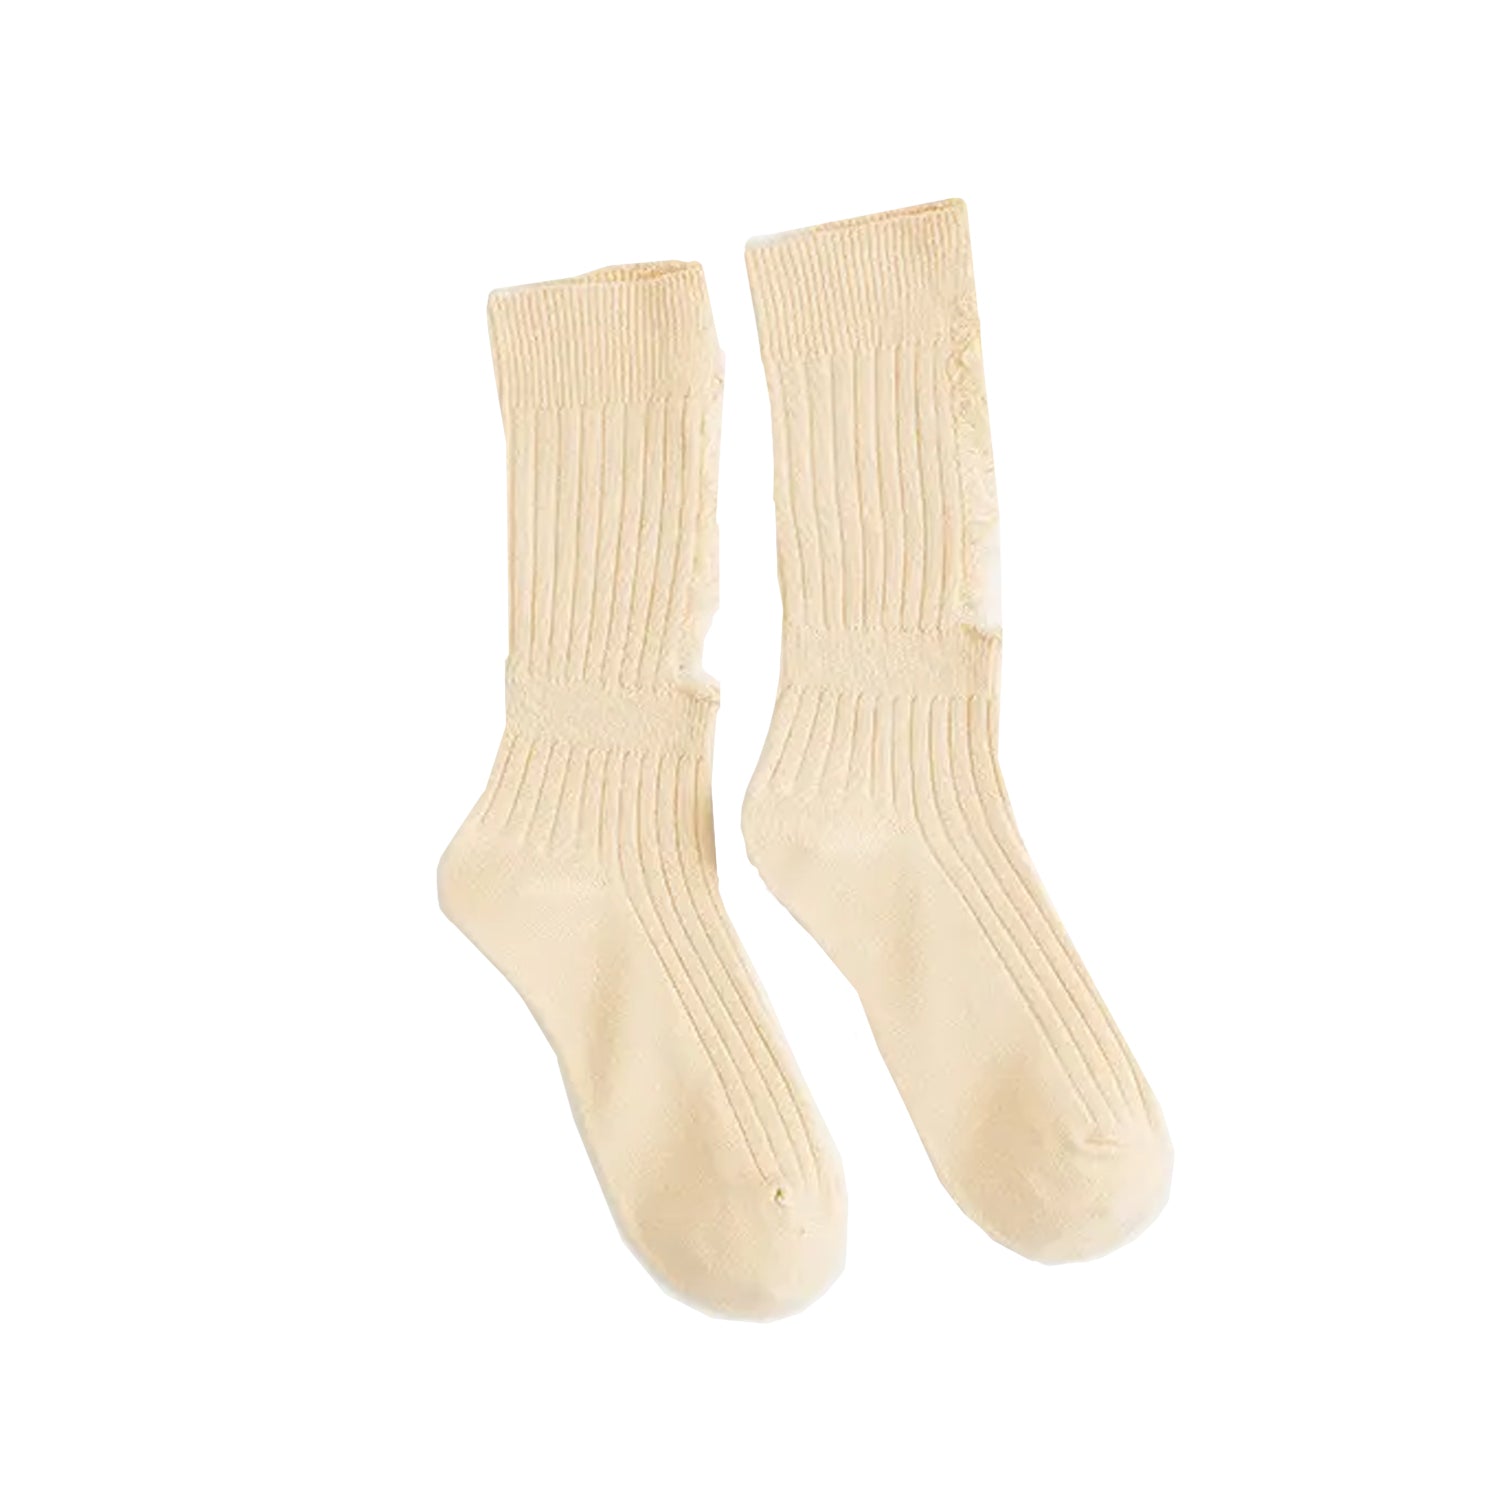 FLOOF Women's Distressed Socks in Cream